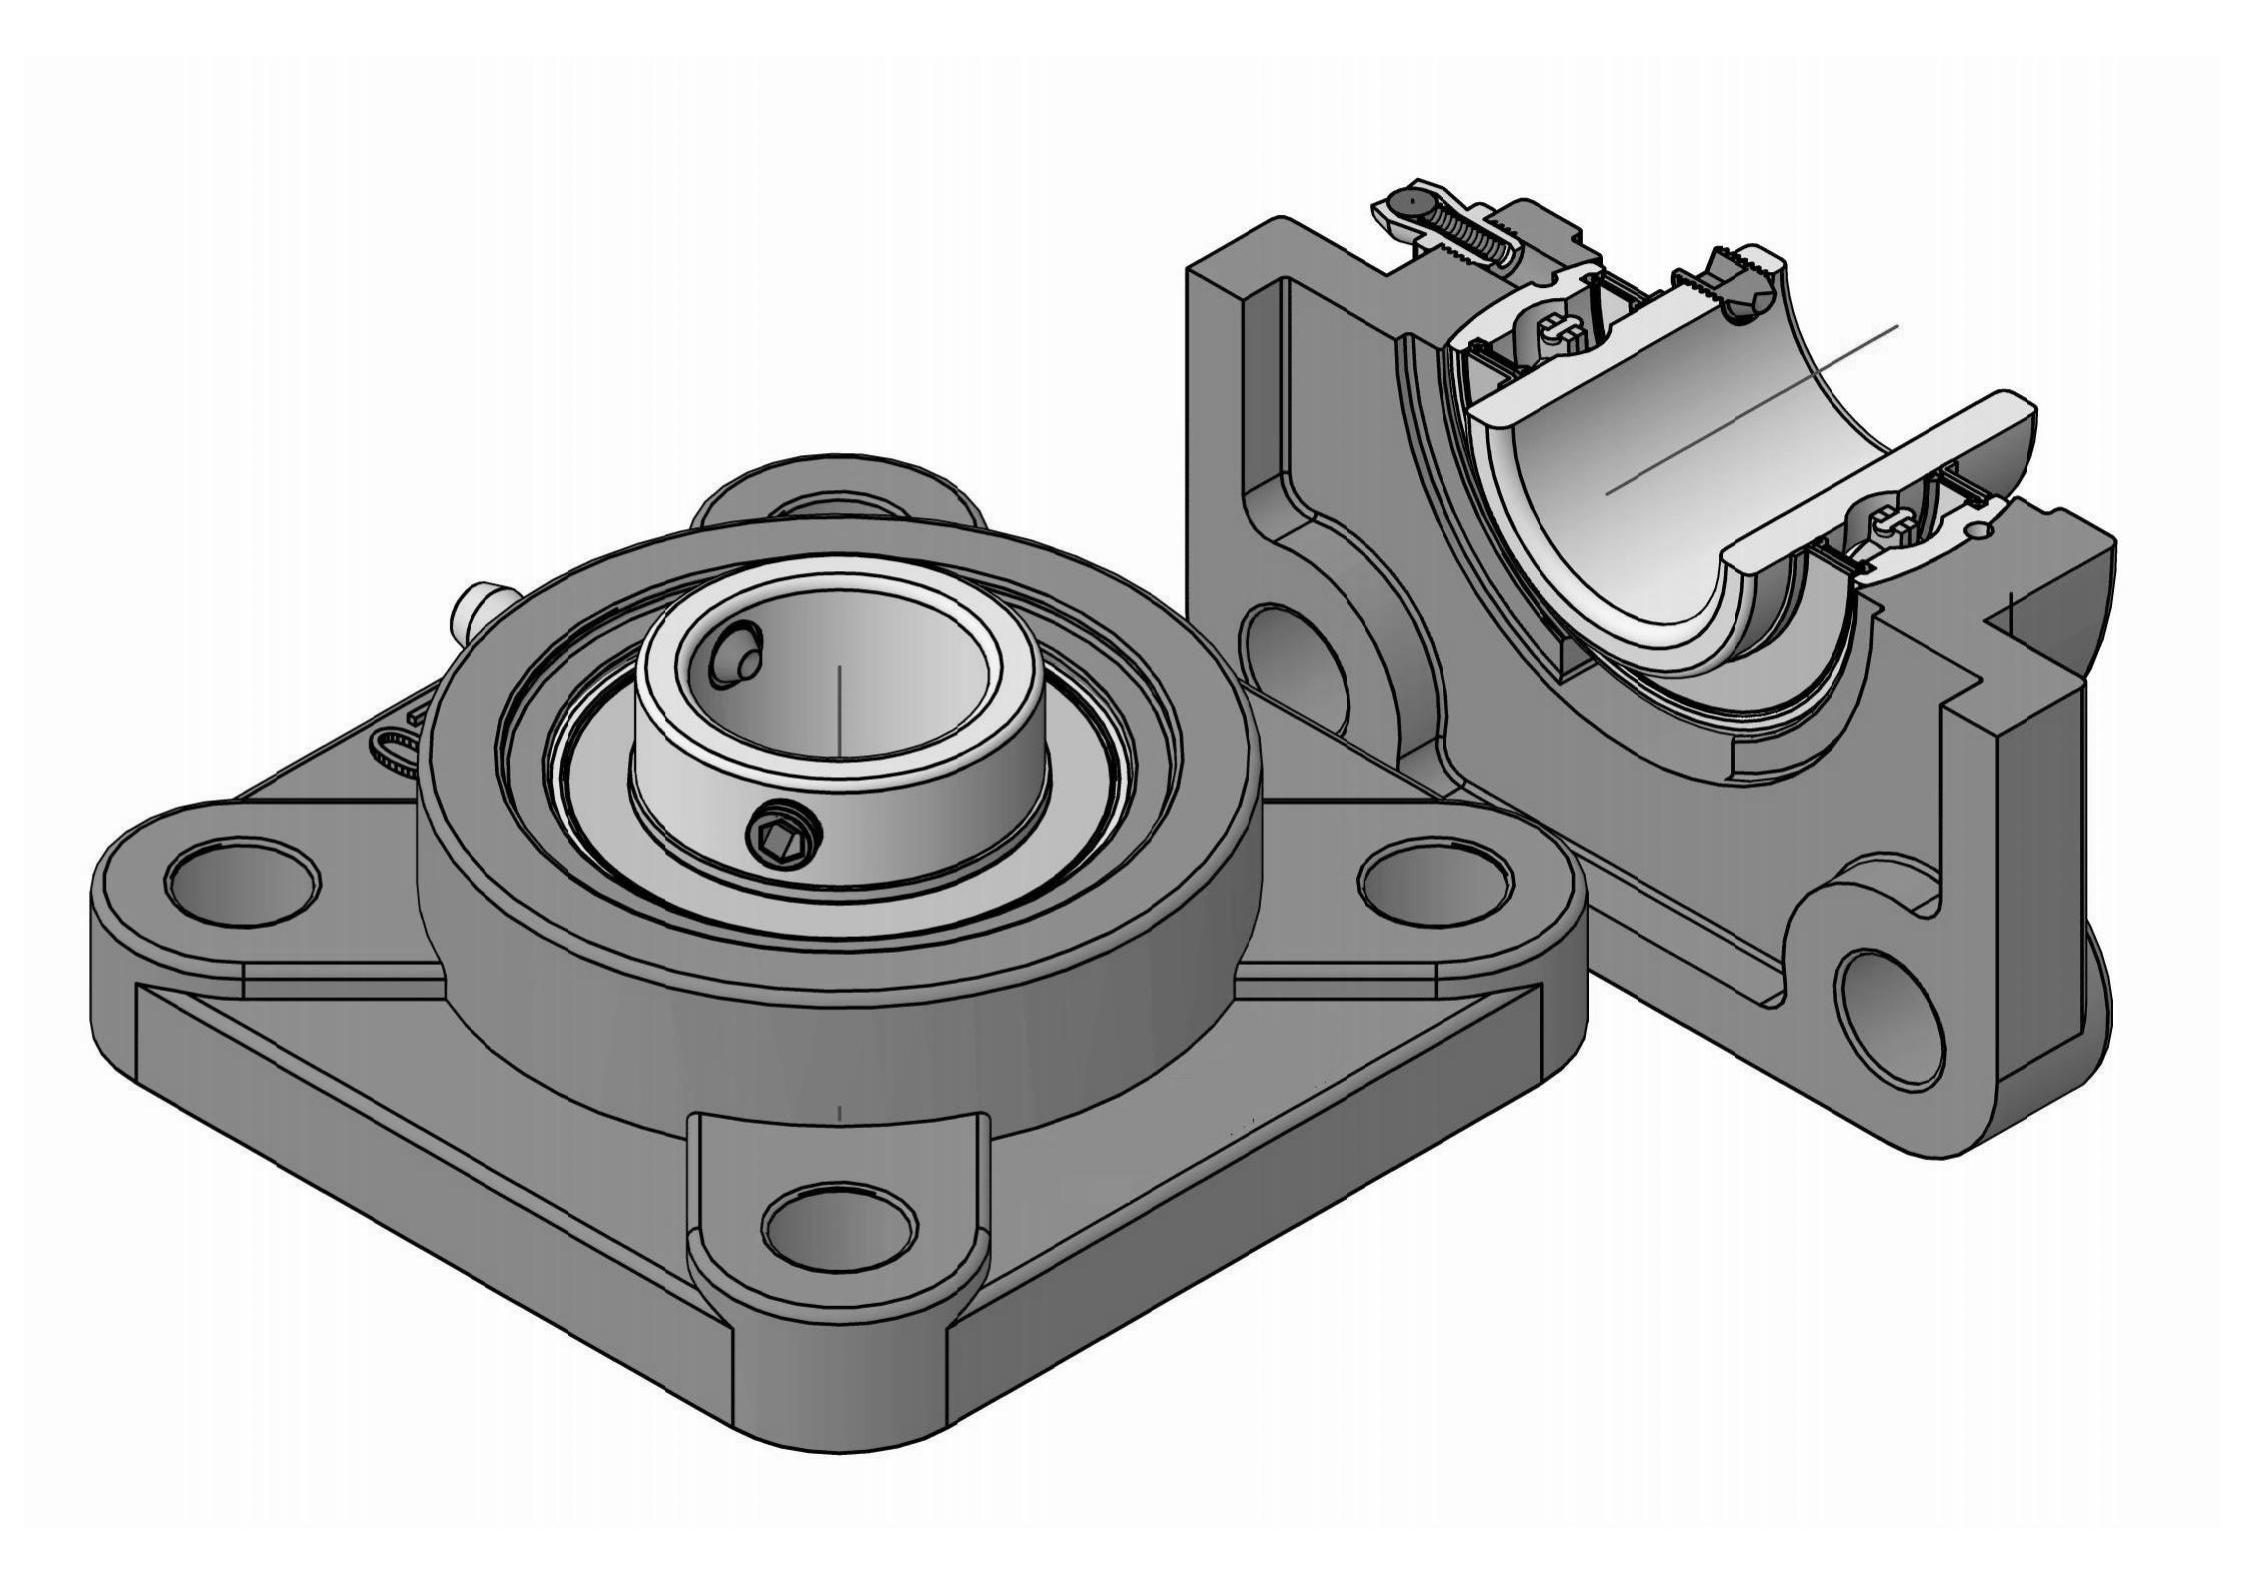 UCFX18 သည် 90 mm bore ပါသော Bolt Square flange bearing ယူနစ် လေးခု